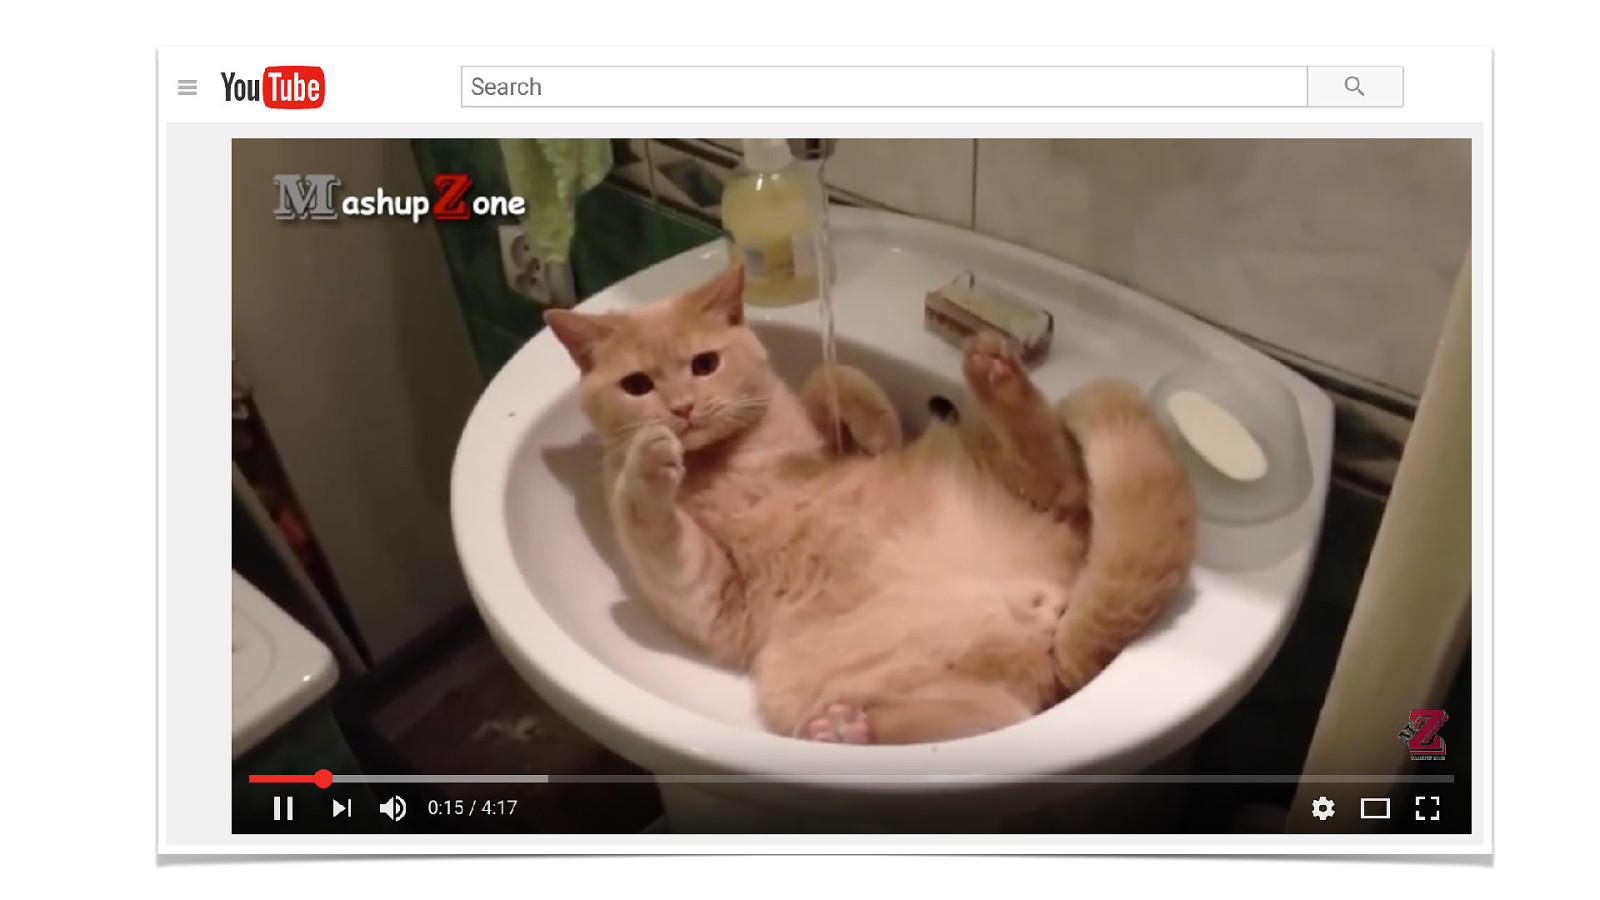 Включи смешное видео 3. Смешные коты. Смешные видеоролики про котов. Смешные видосики про котиков. Смешные коты и кошки до слёз.